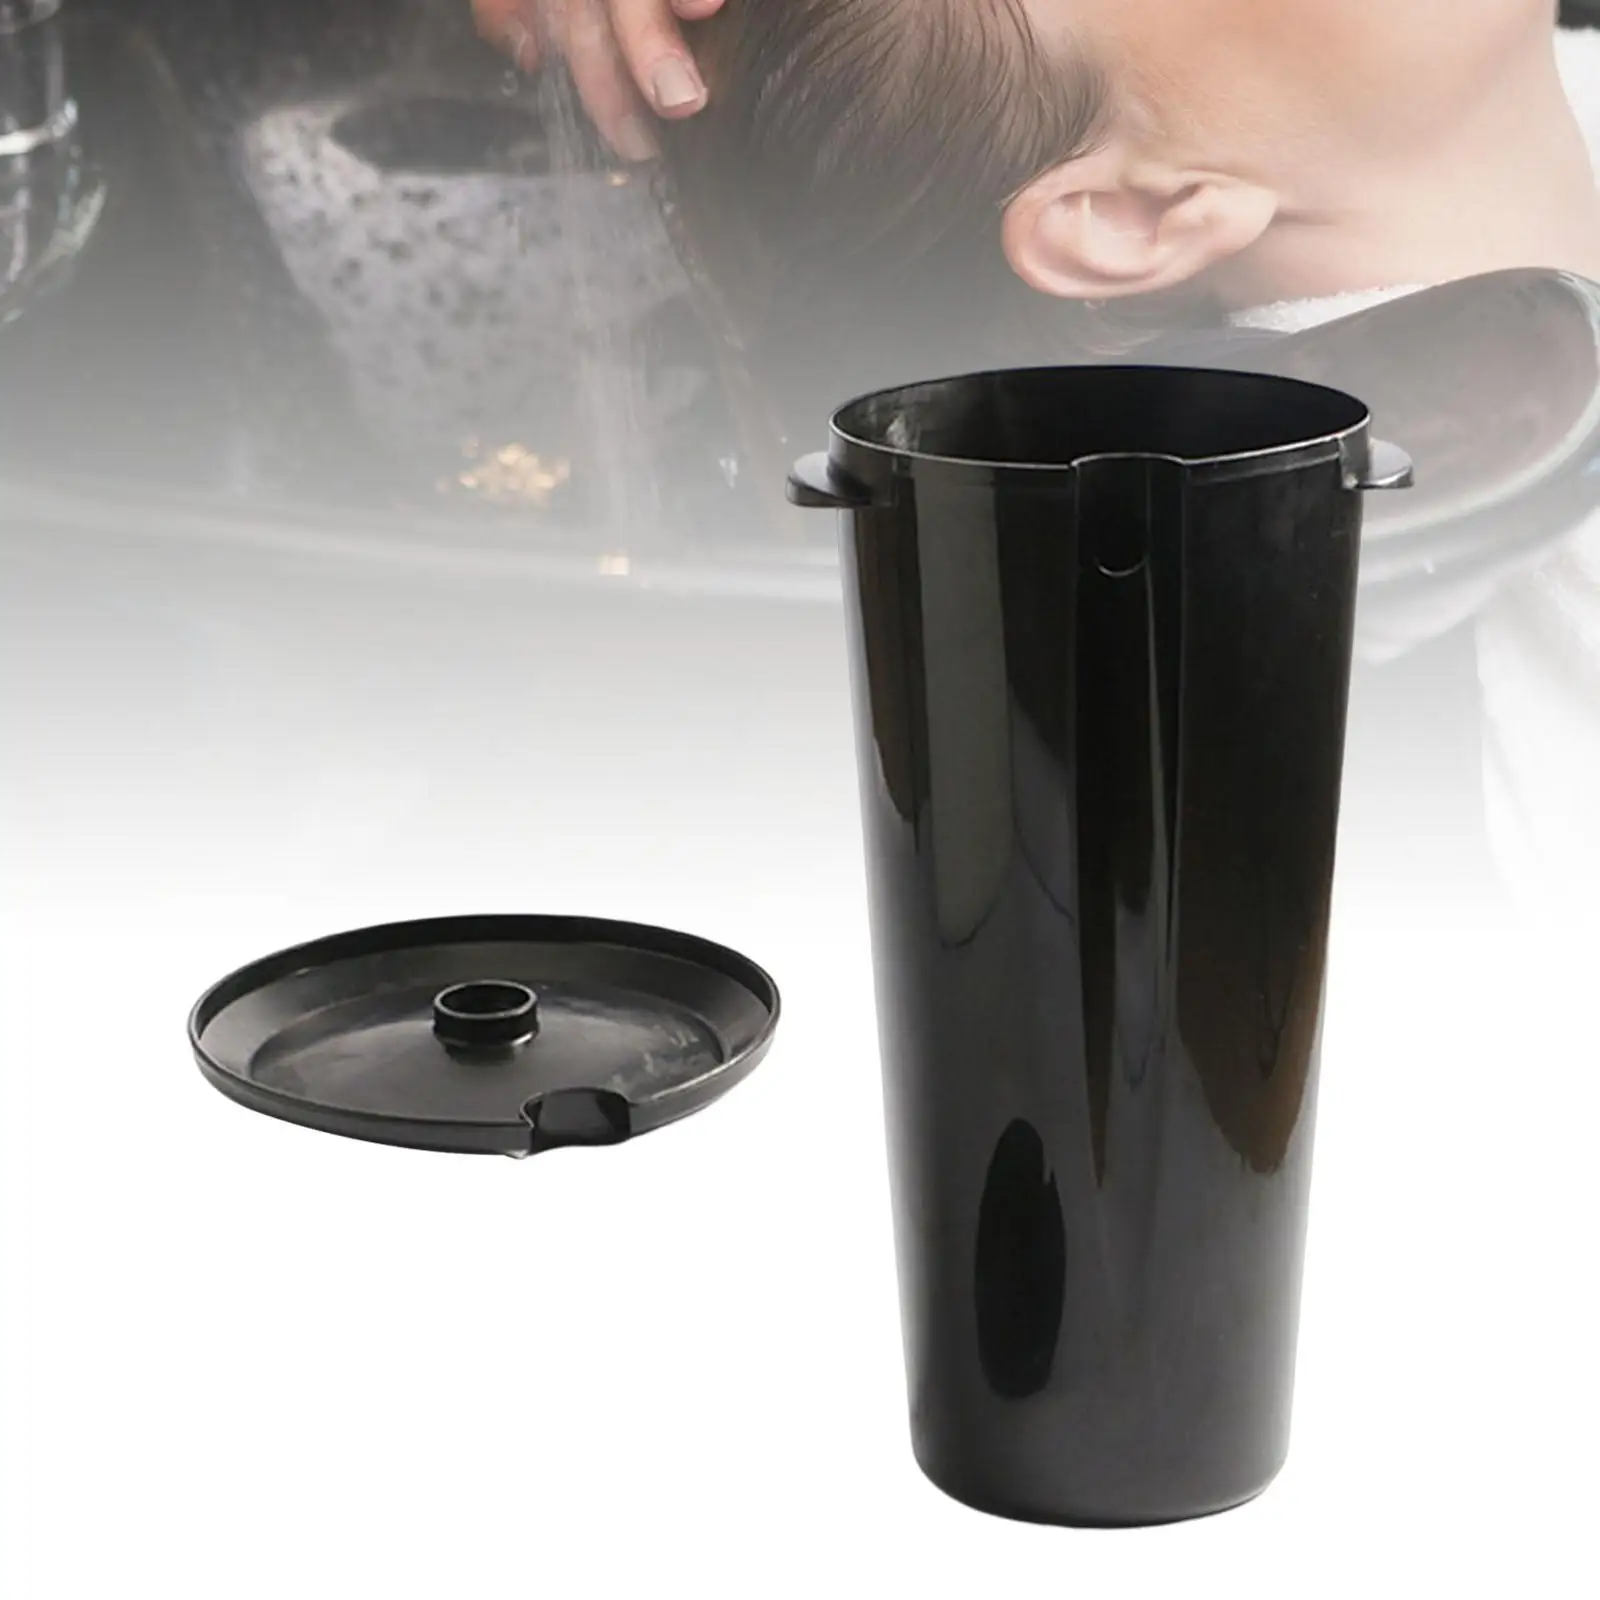 10L Hair Wash Basin Rotatable Large Capacity Wash Bowl Wash Basin bucket water Bucket for Hairdressing Home